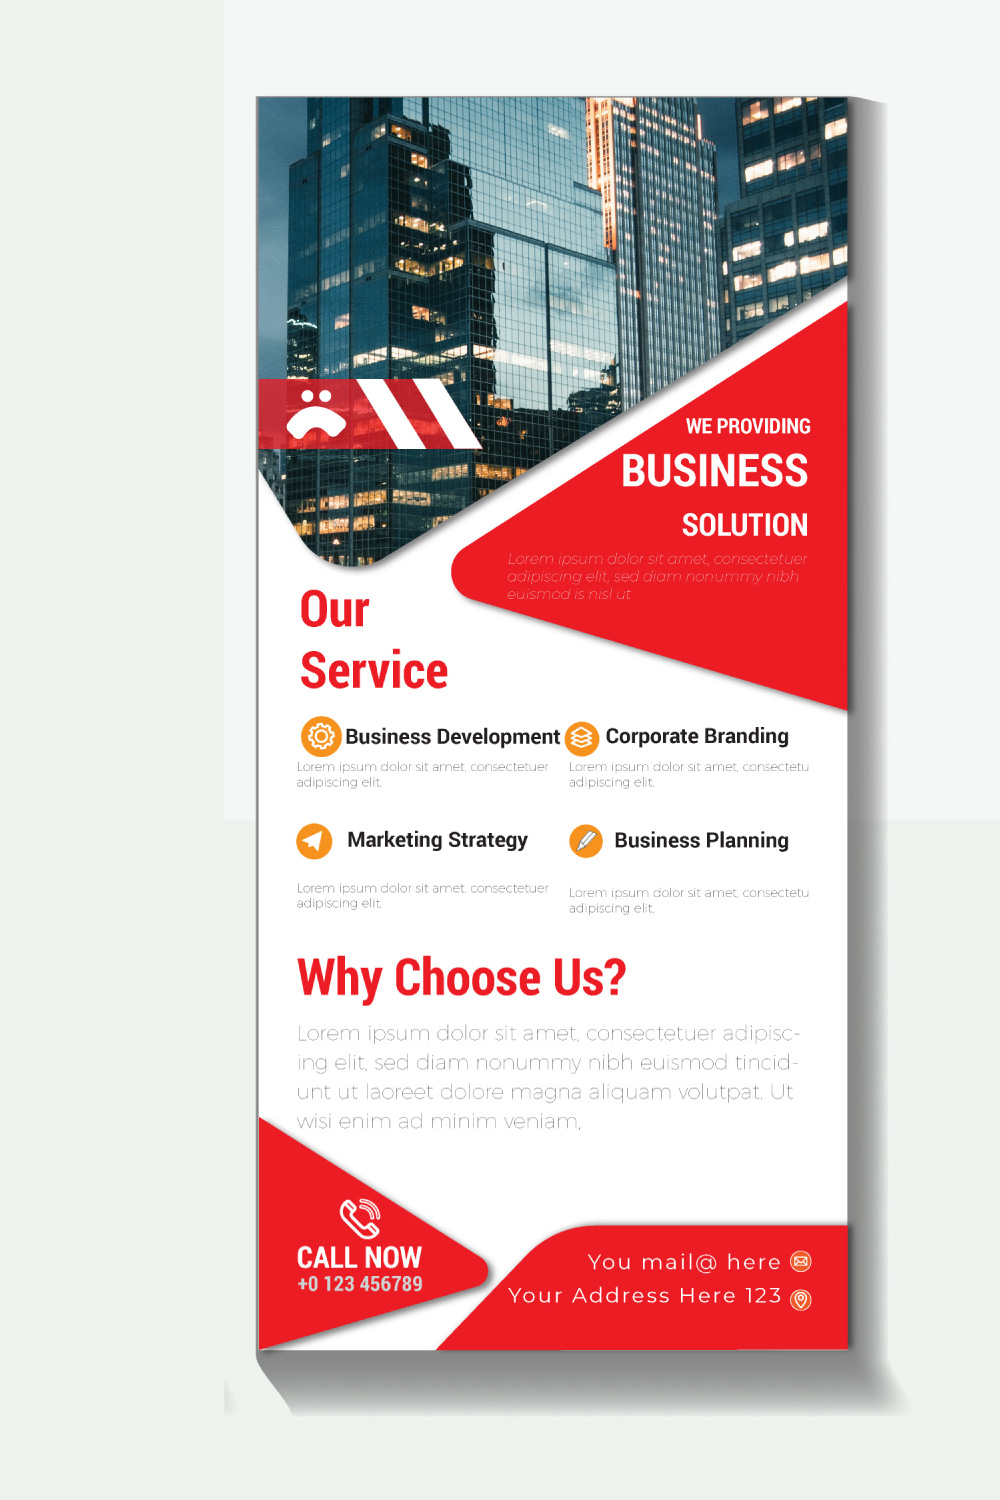 03 Rack card design | dl flyer design | rack card template for your business pinterest preview image.